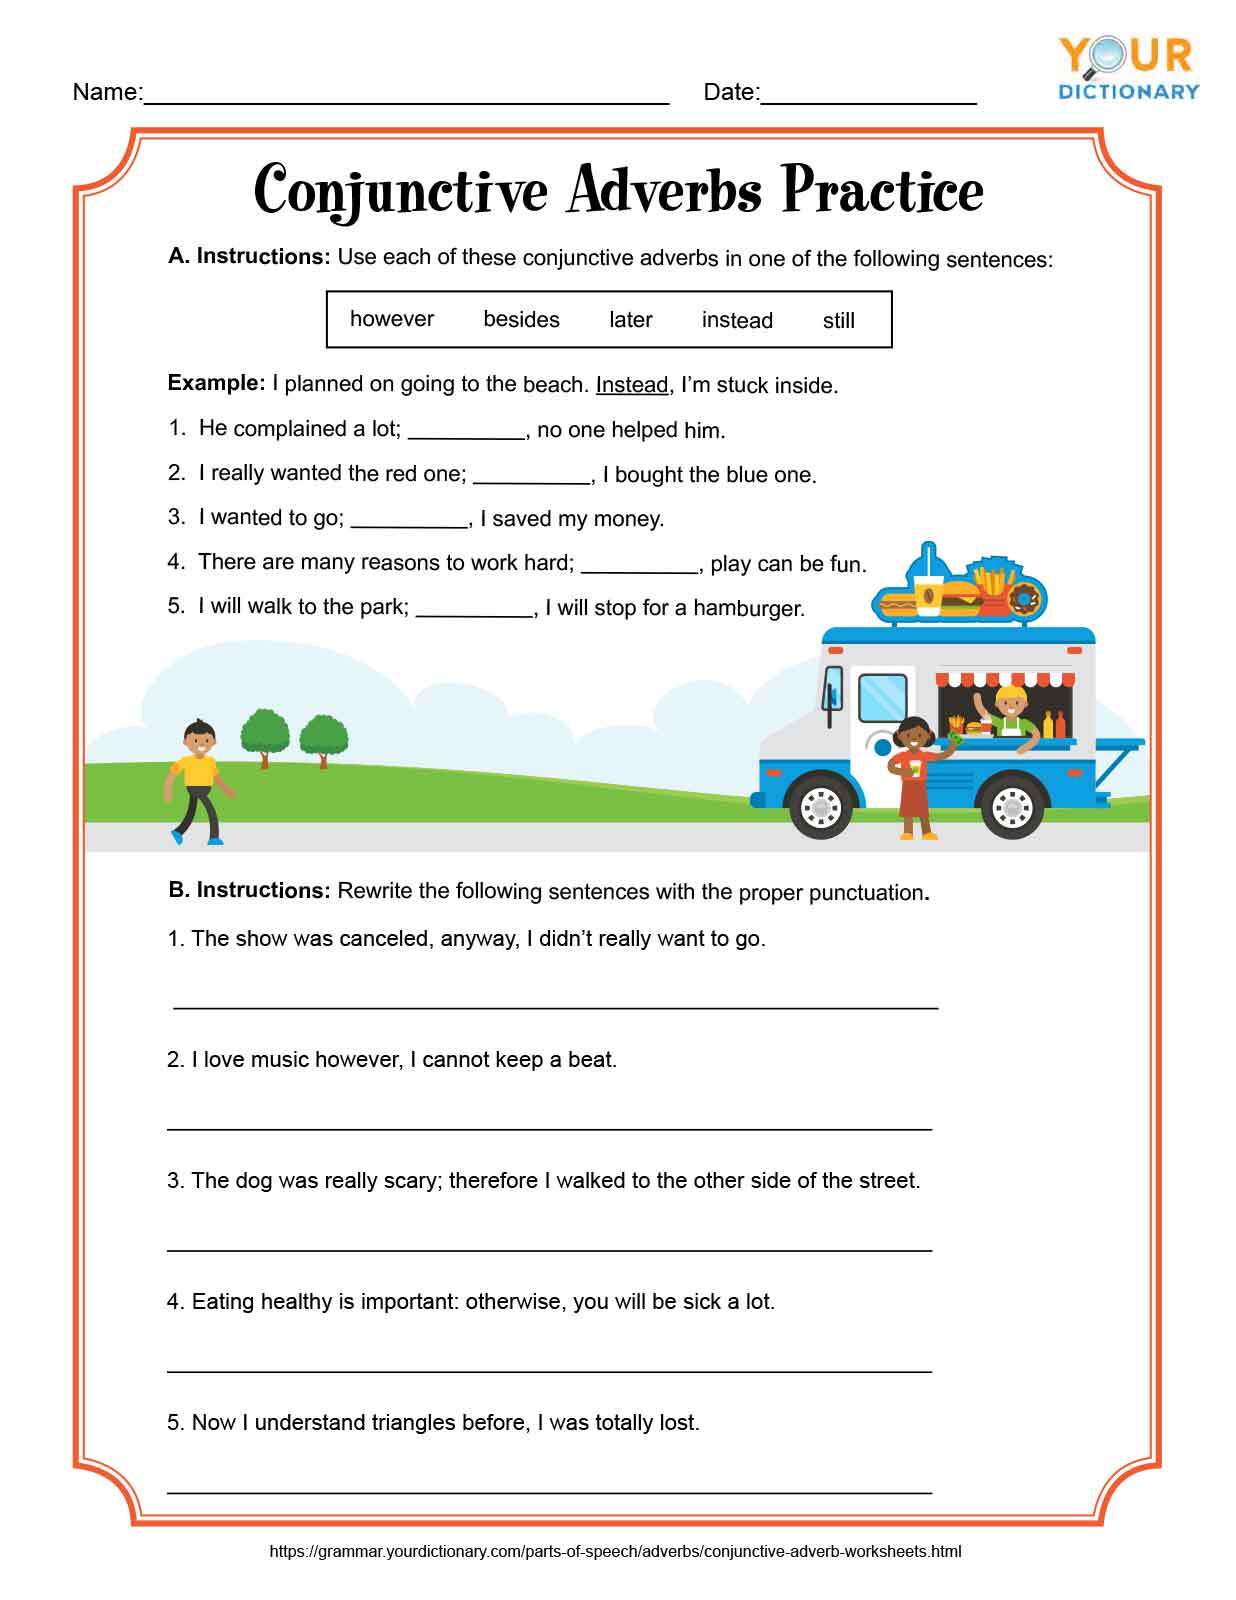 Conjunctive Adverbs Practice